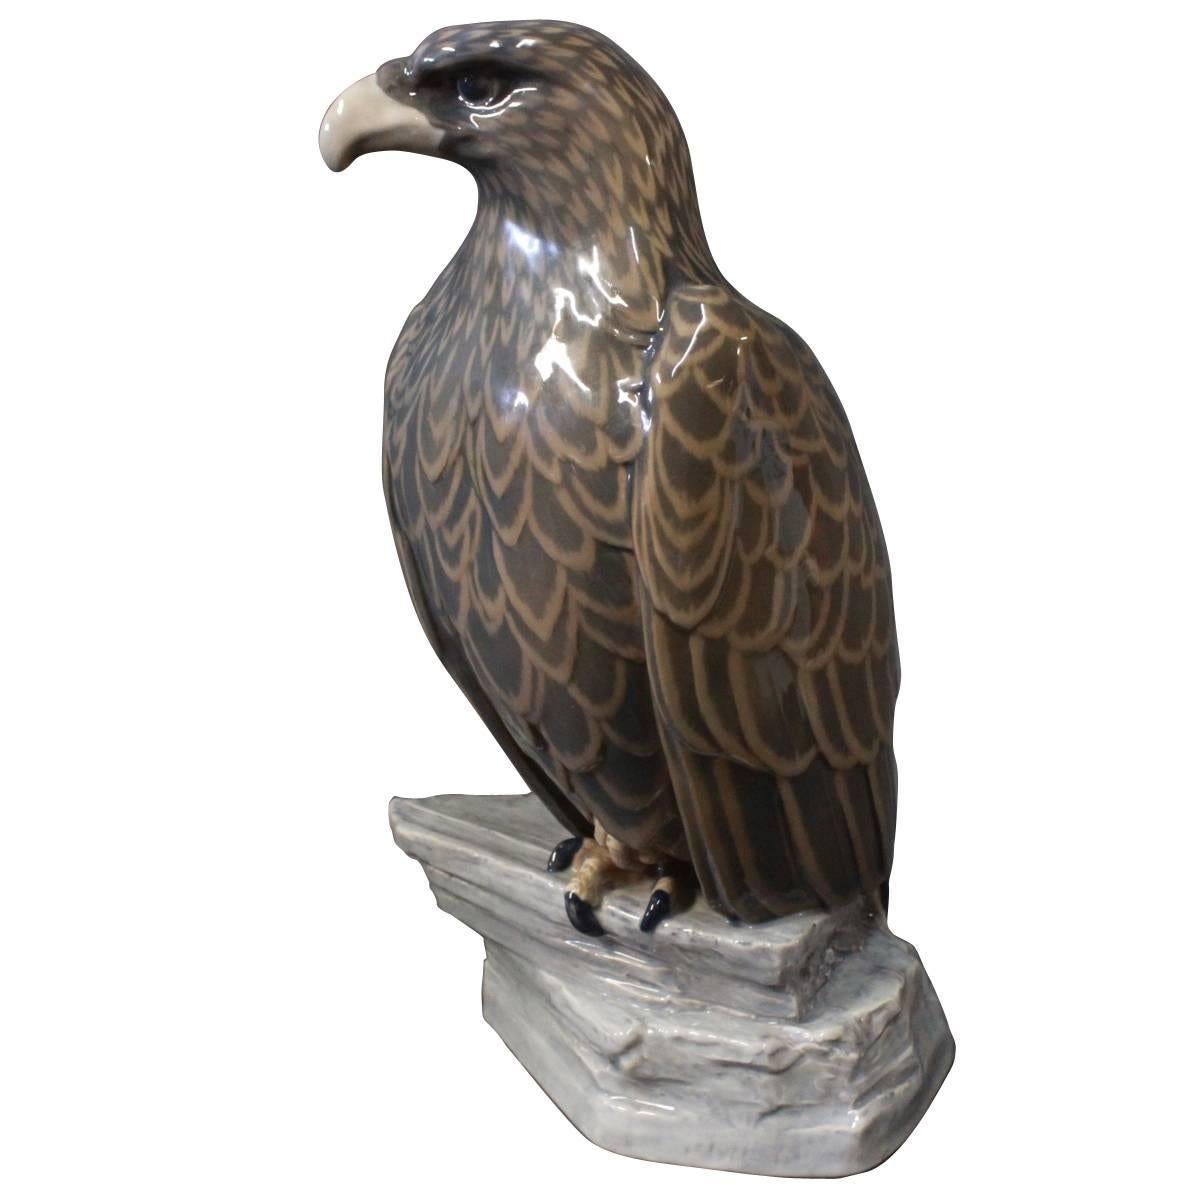 Porcelain Figurine "An Eagle" by Jens Peter Dahl-Jensen for Bing and Groendahl